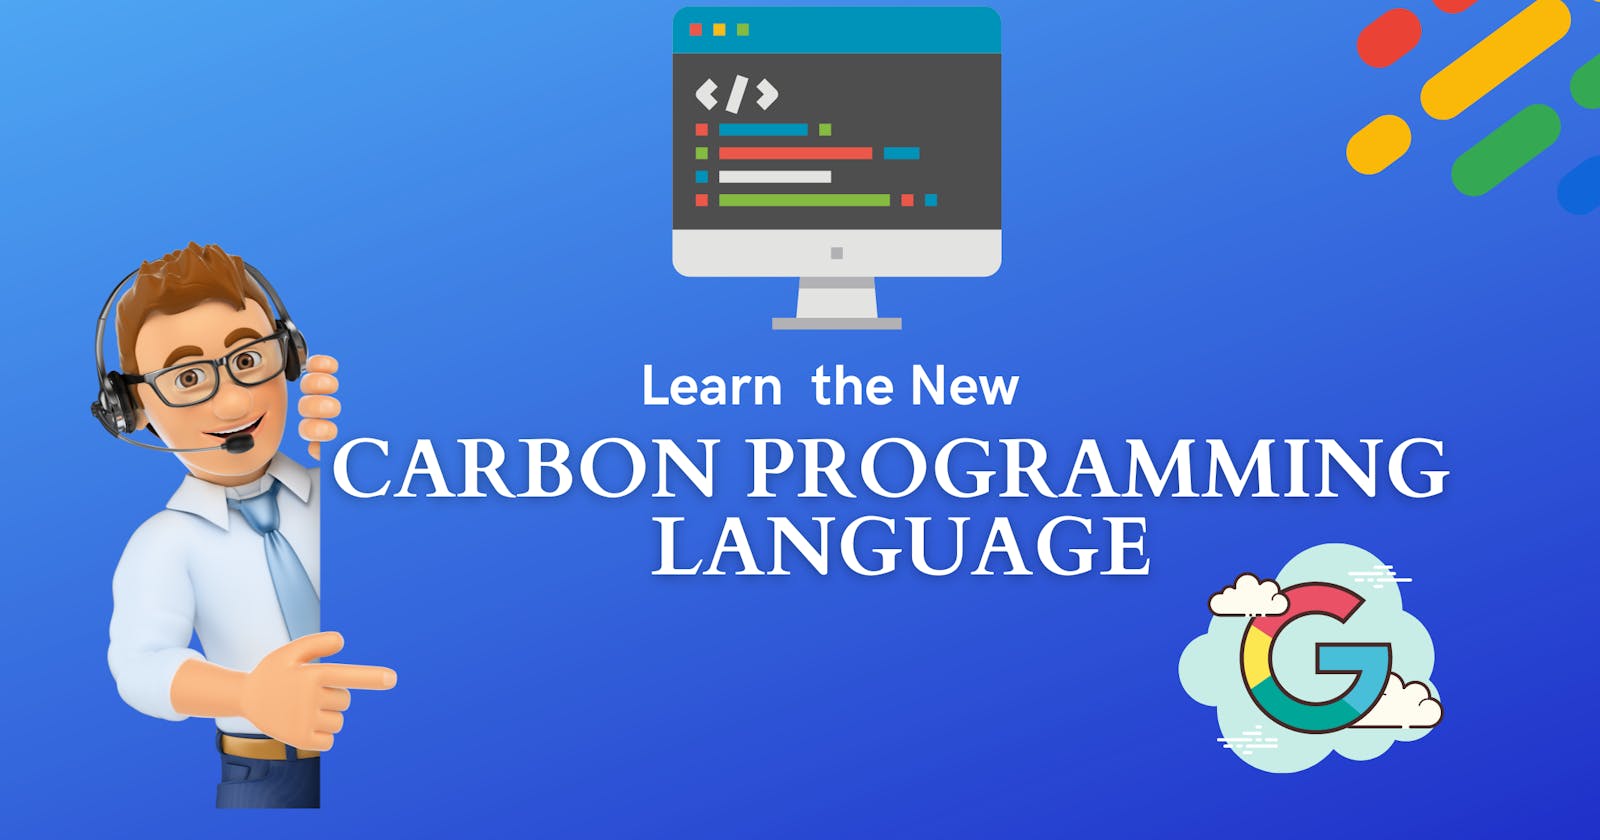 What is Carbon Programming Language?